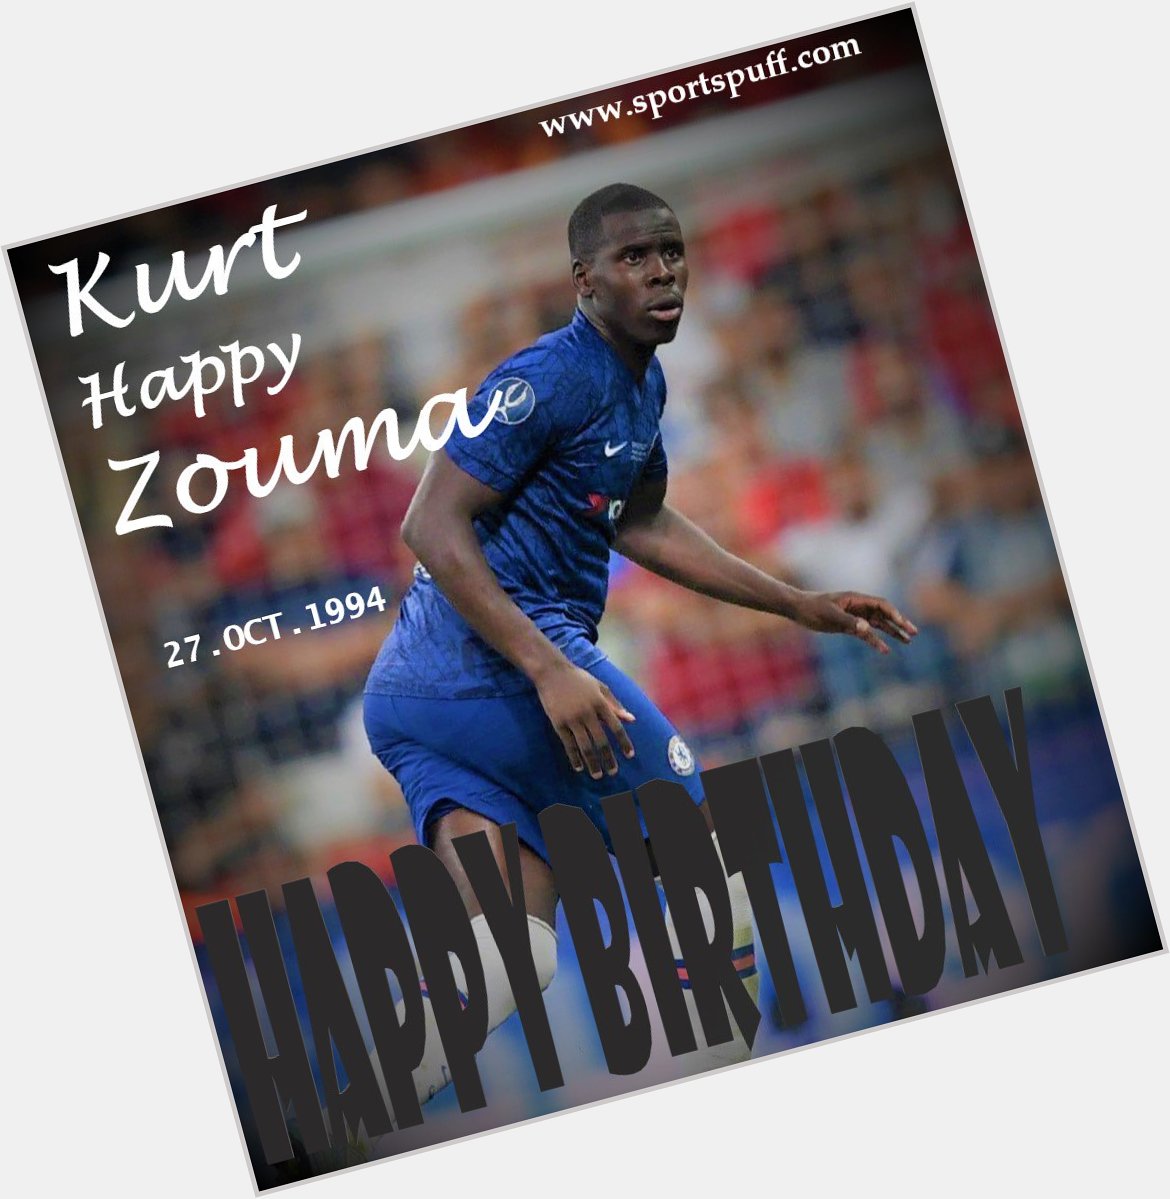 Chelsea and France international Kurt Zouma is celebrating his birthday, happy 25th birthday! 